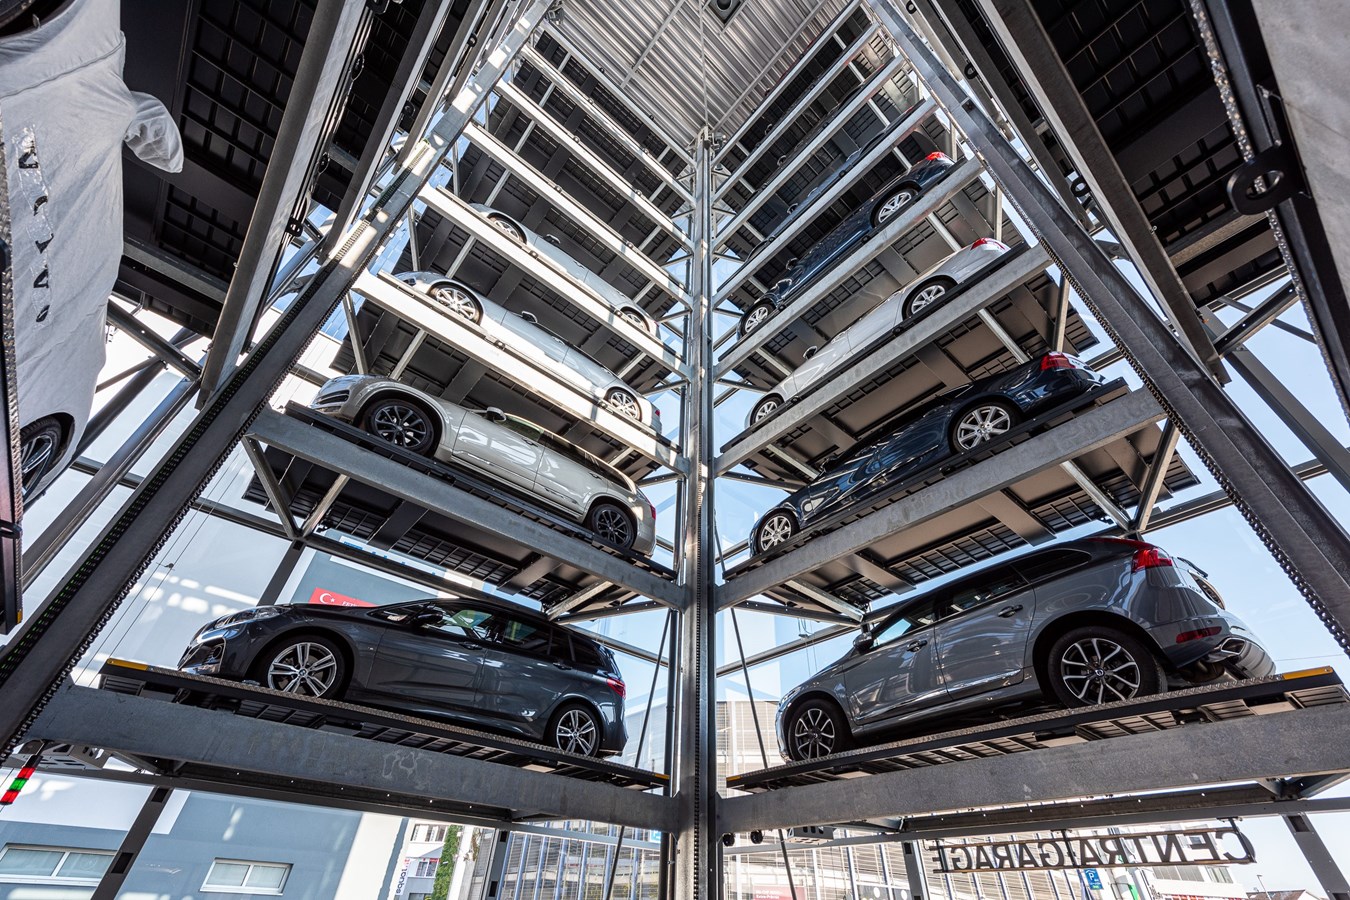 Volvo Tower, Centra Garage AG, Basel